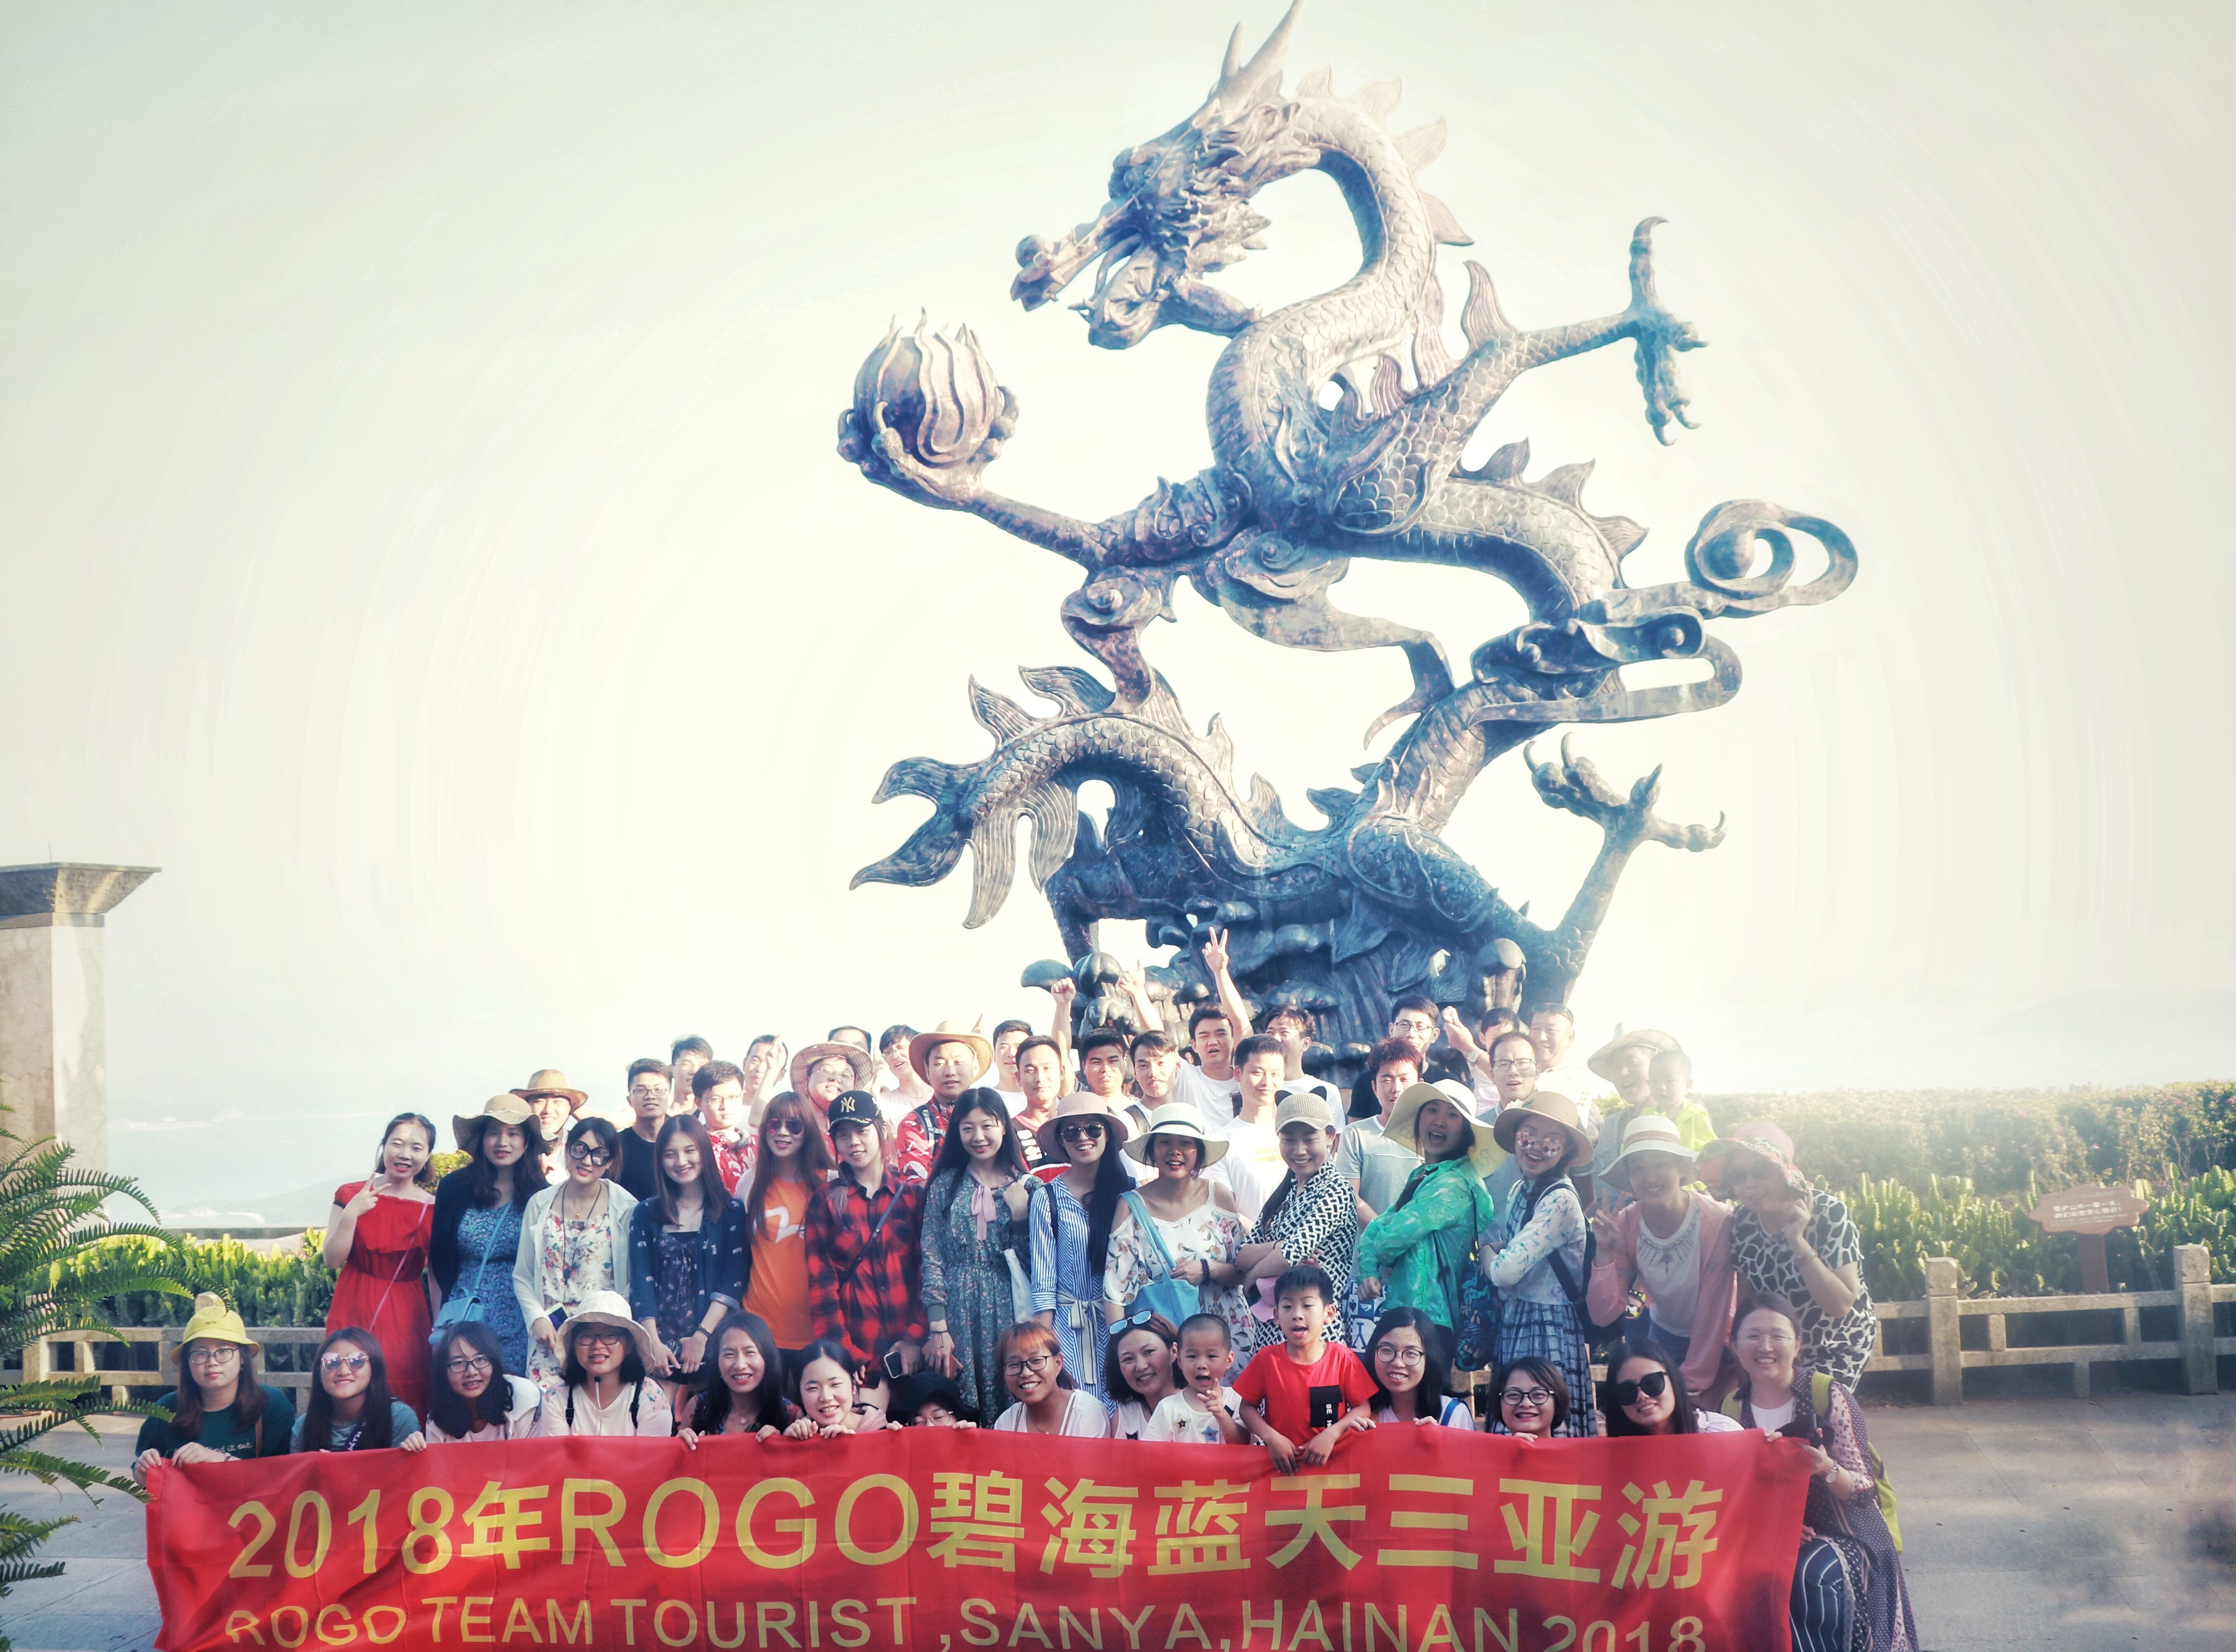 Rogo Industrial (Shanghai) Co., Ltd.